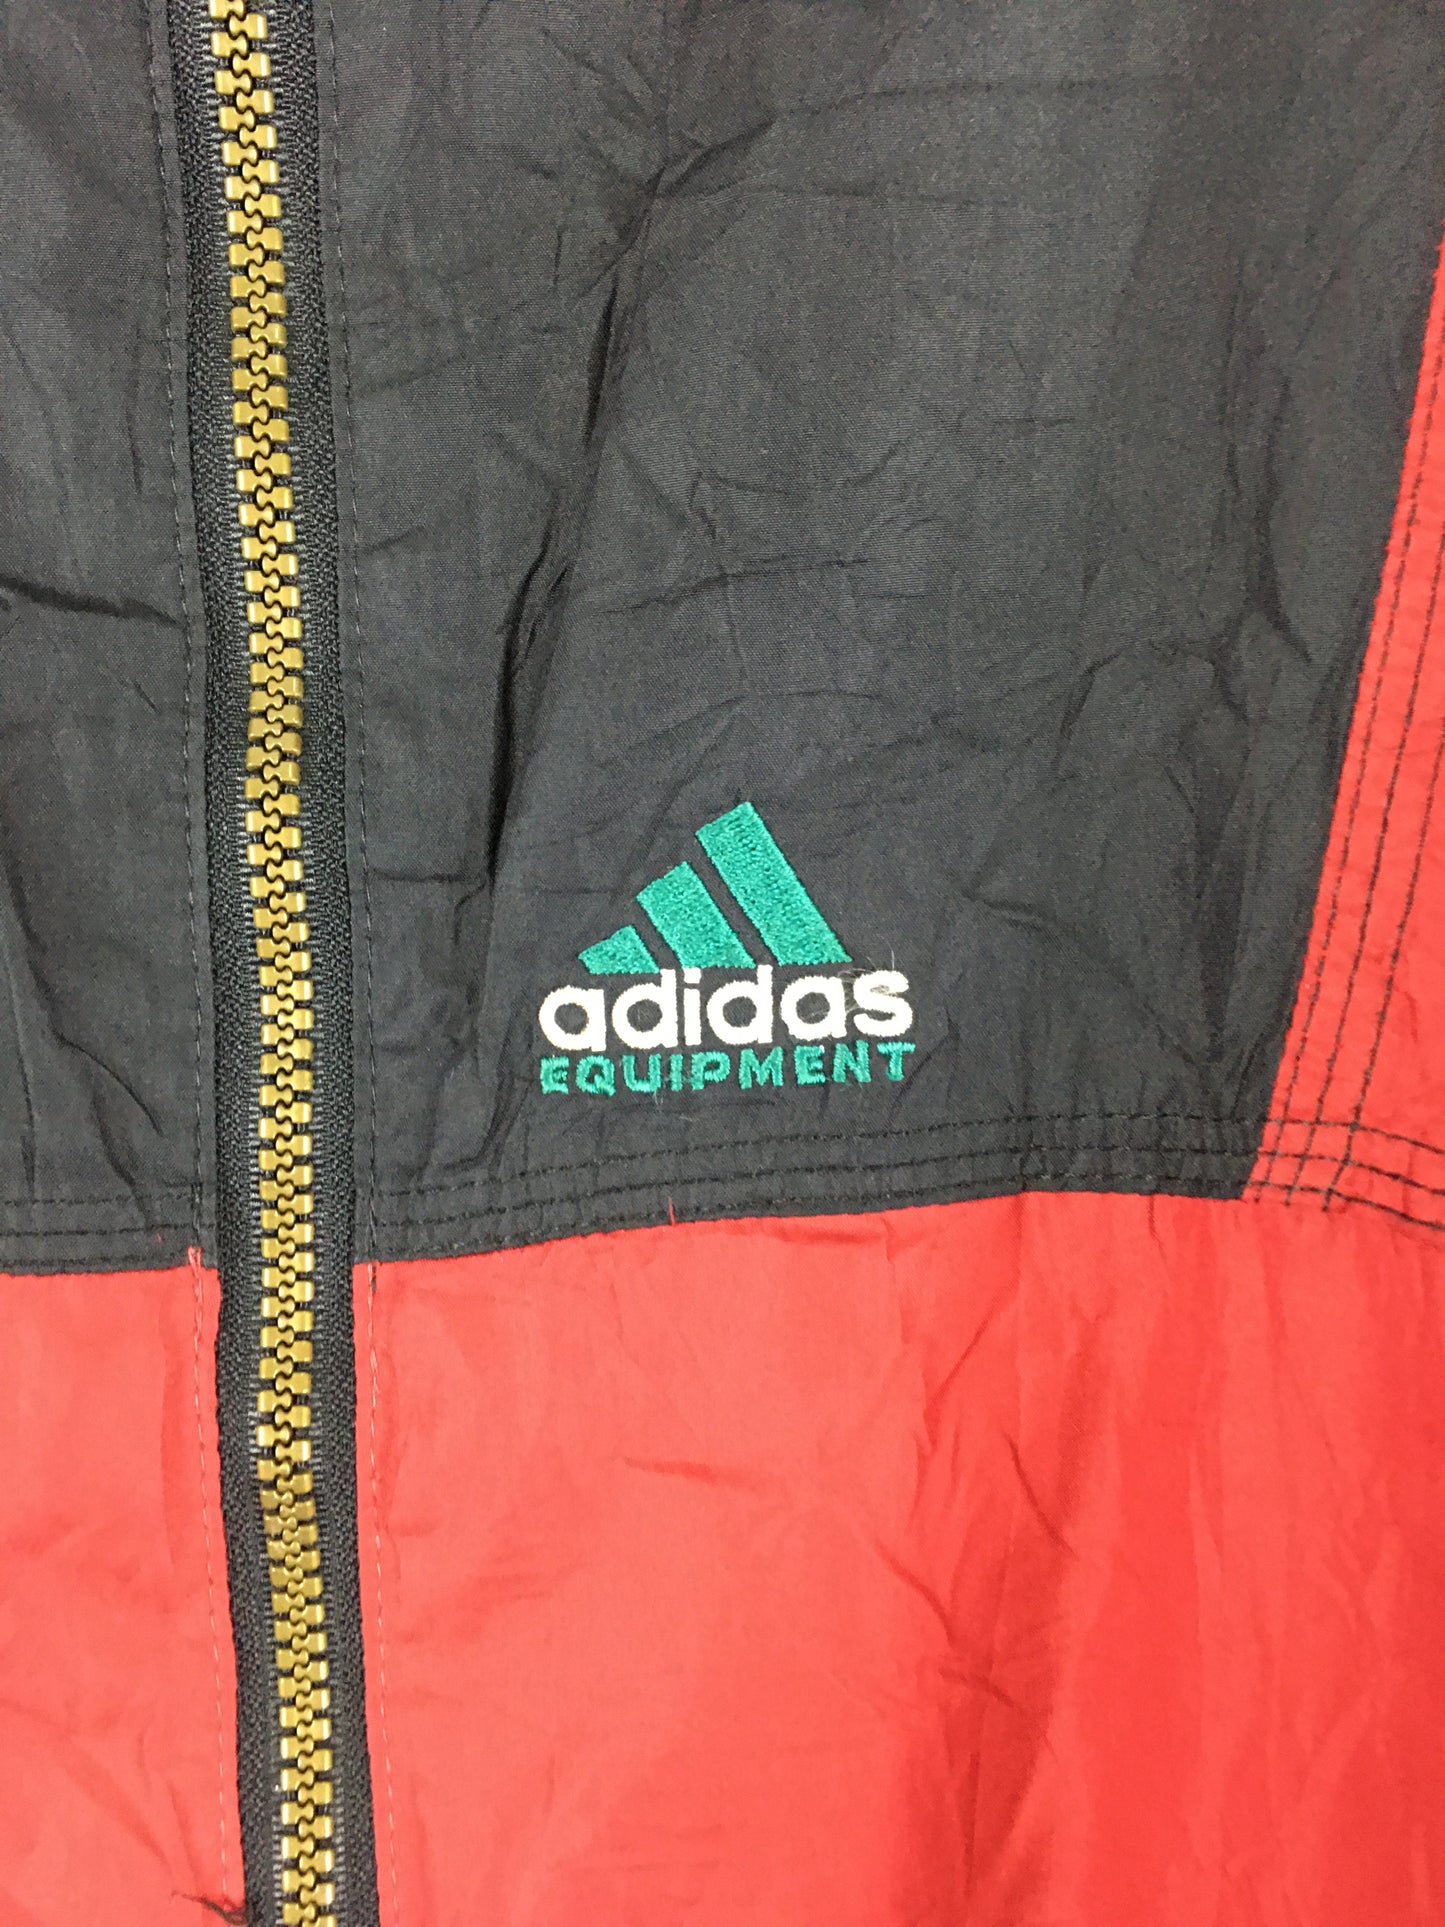 Adidas Equipment 90's Windbreaker Heavy Jacket size